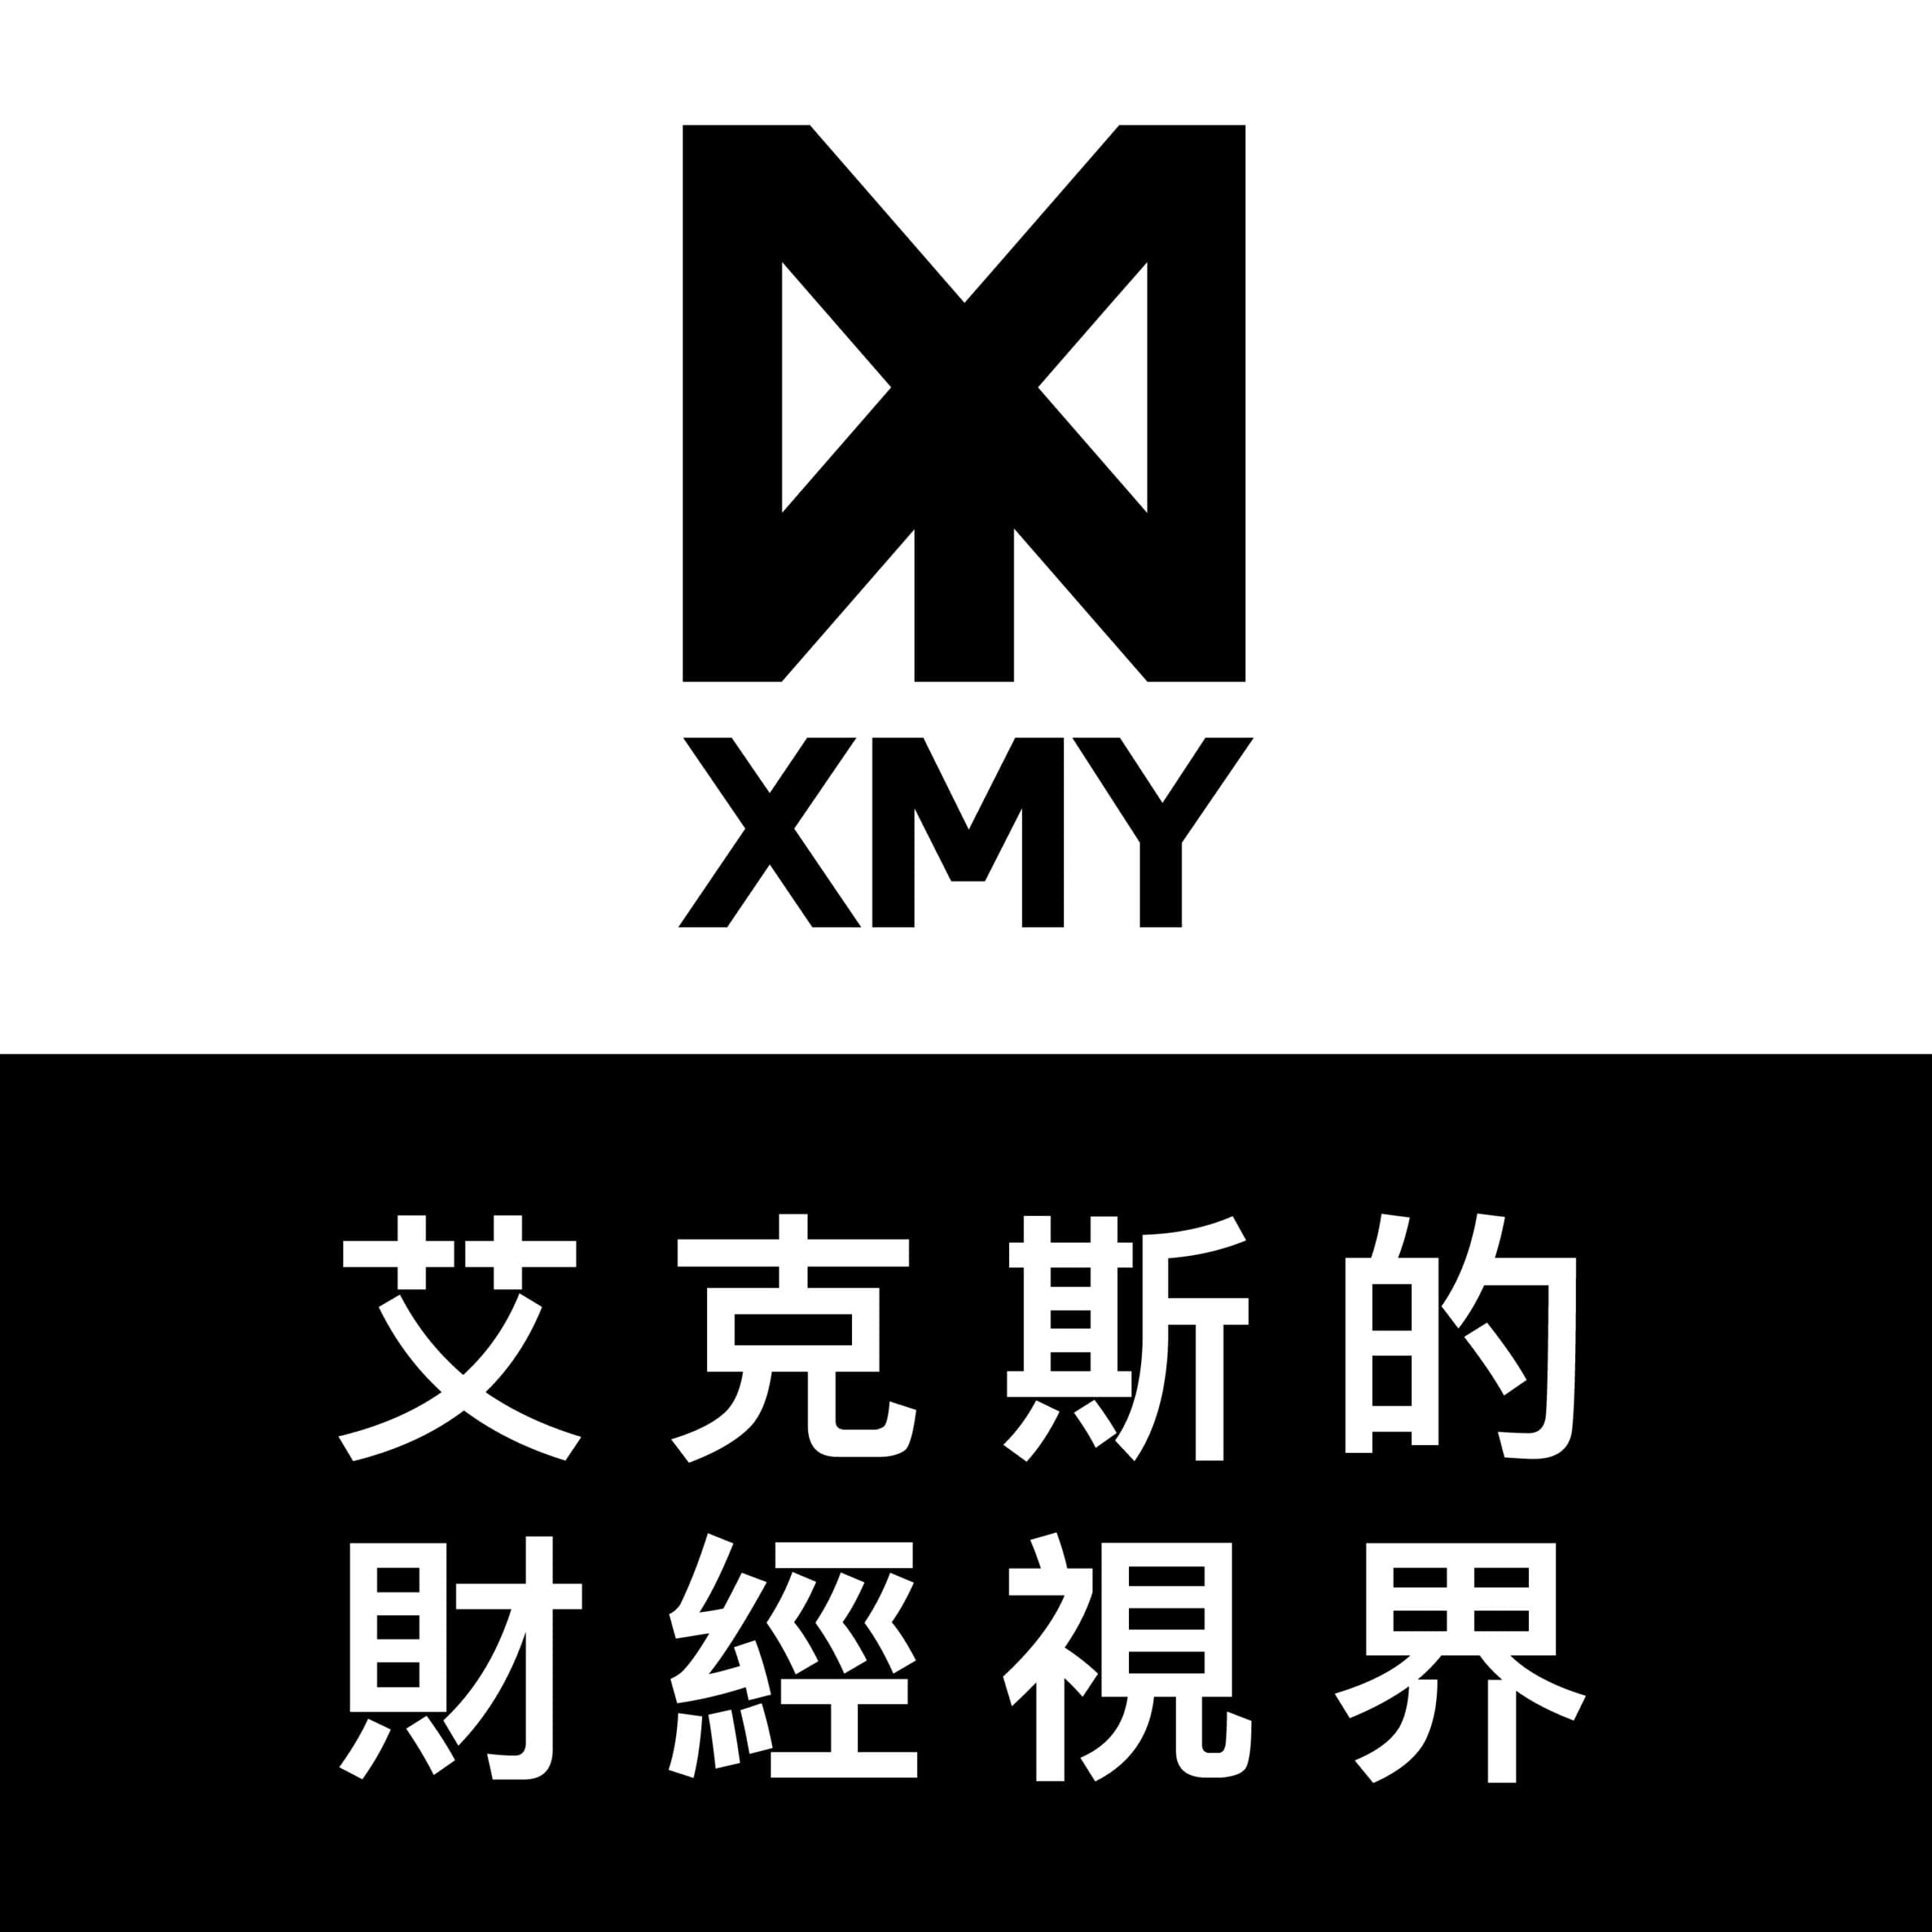 XMY logo scaled